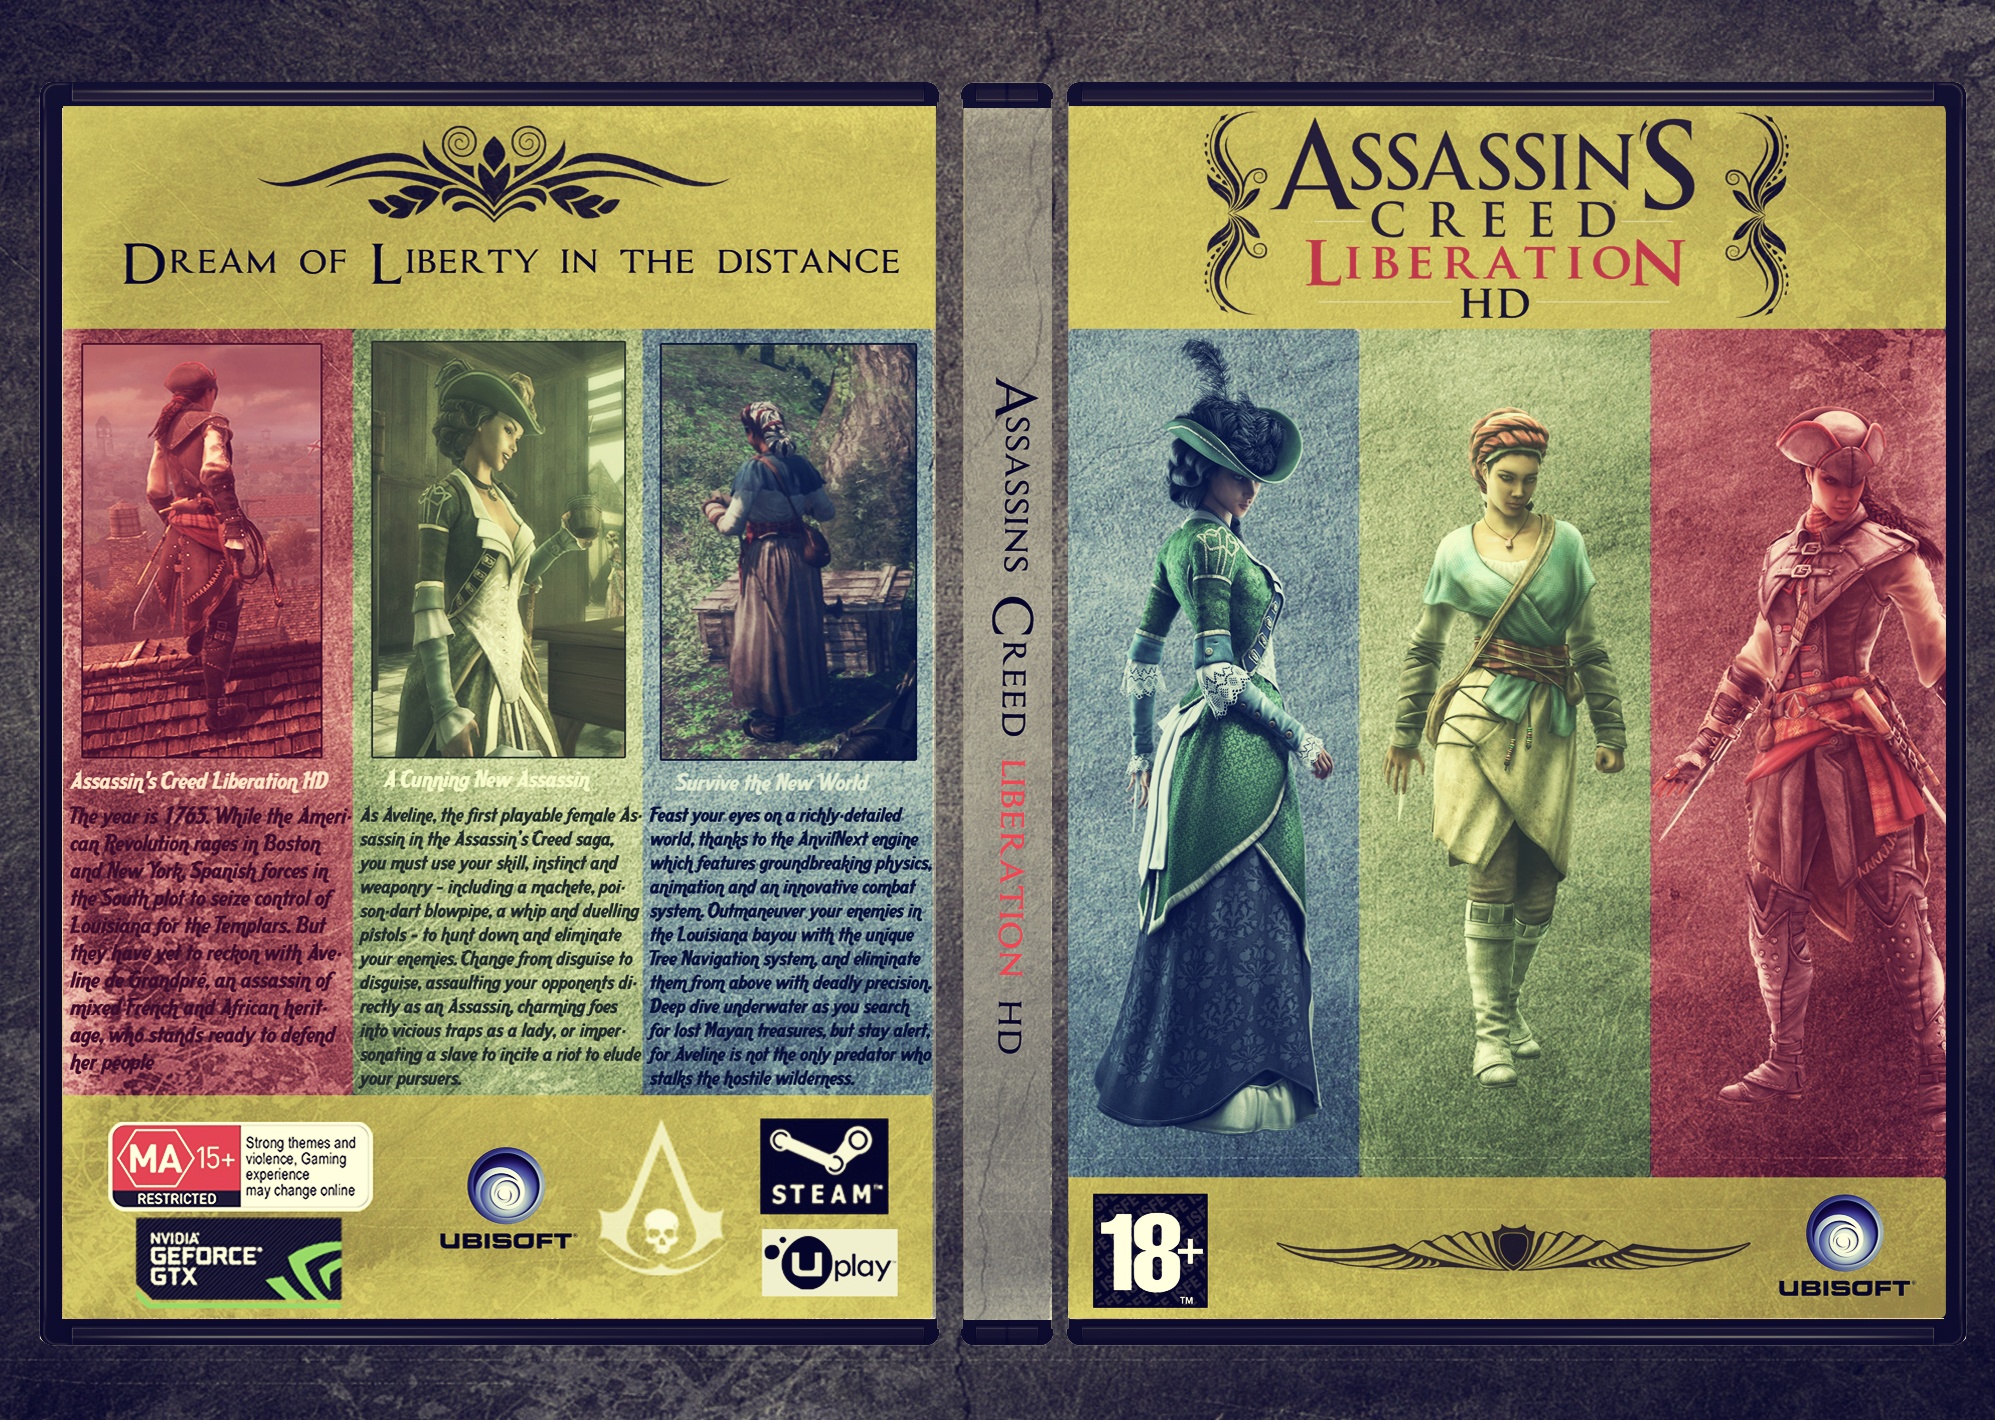 Assassin's Creed Liberation HD box cover